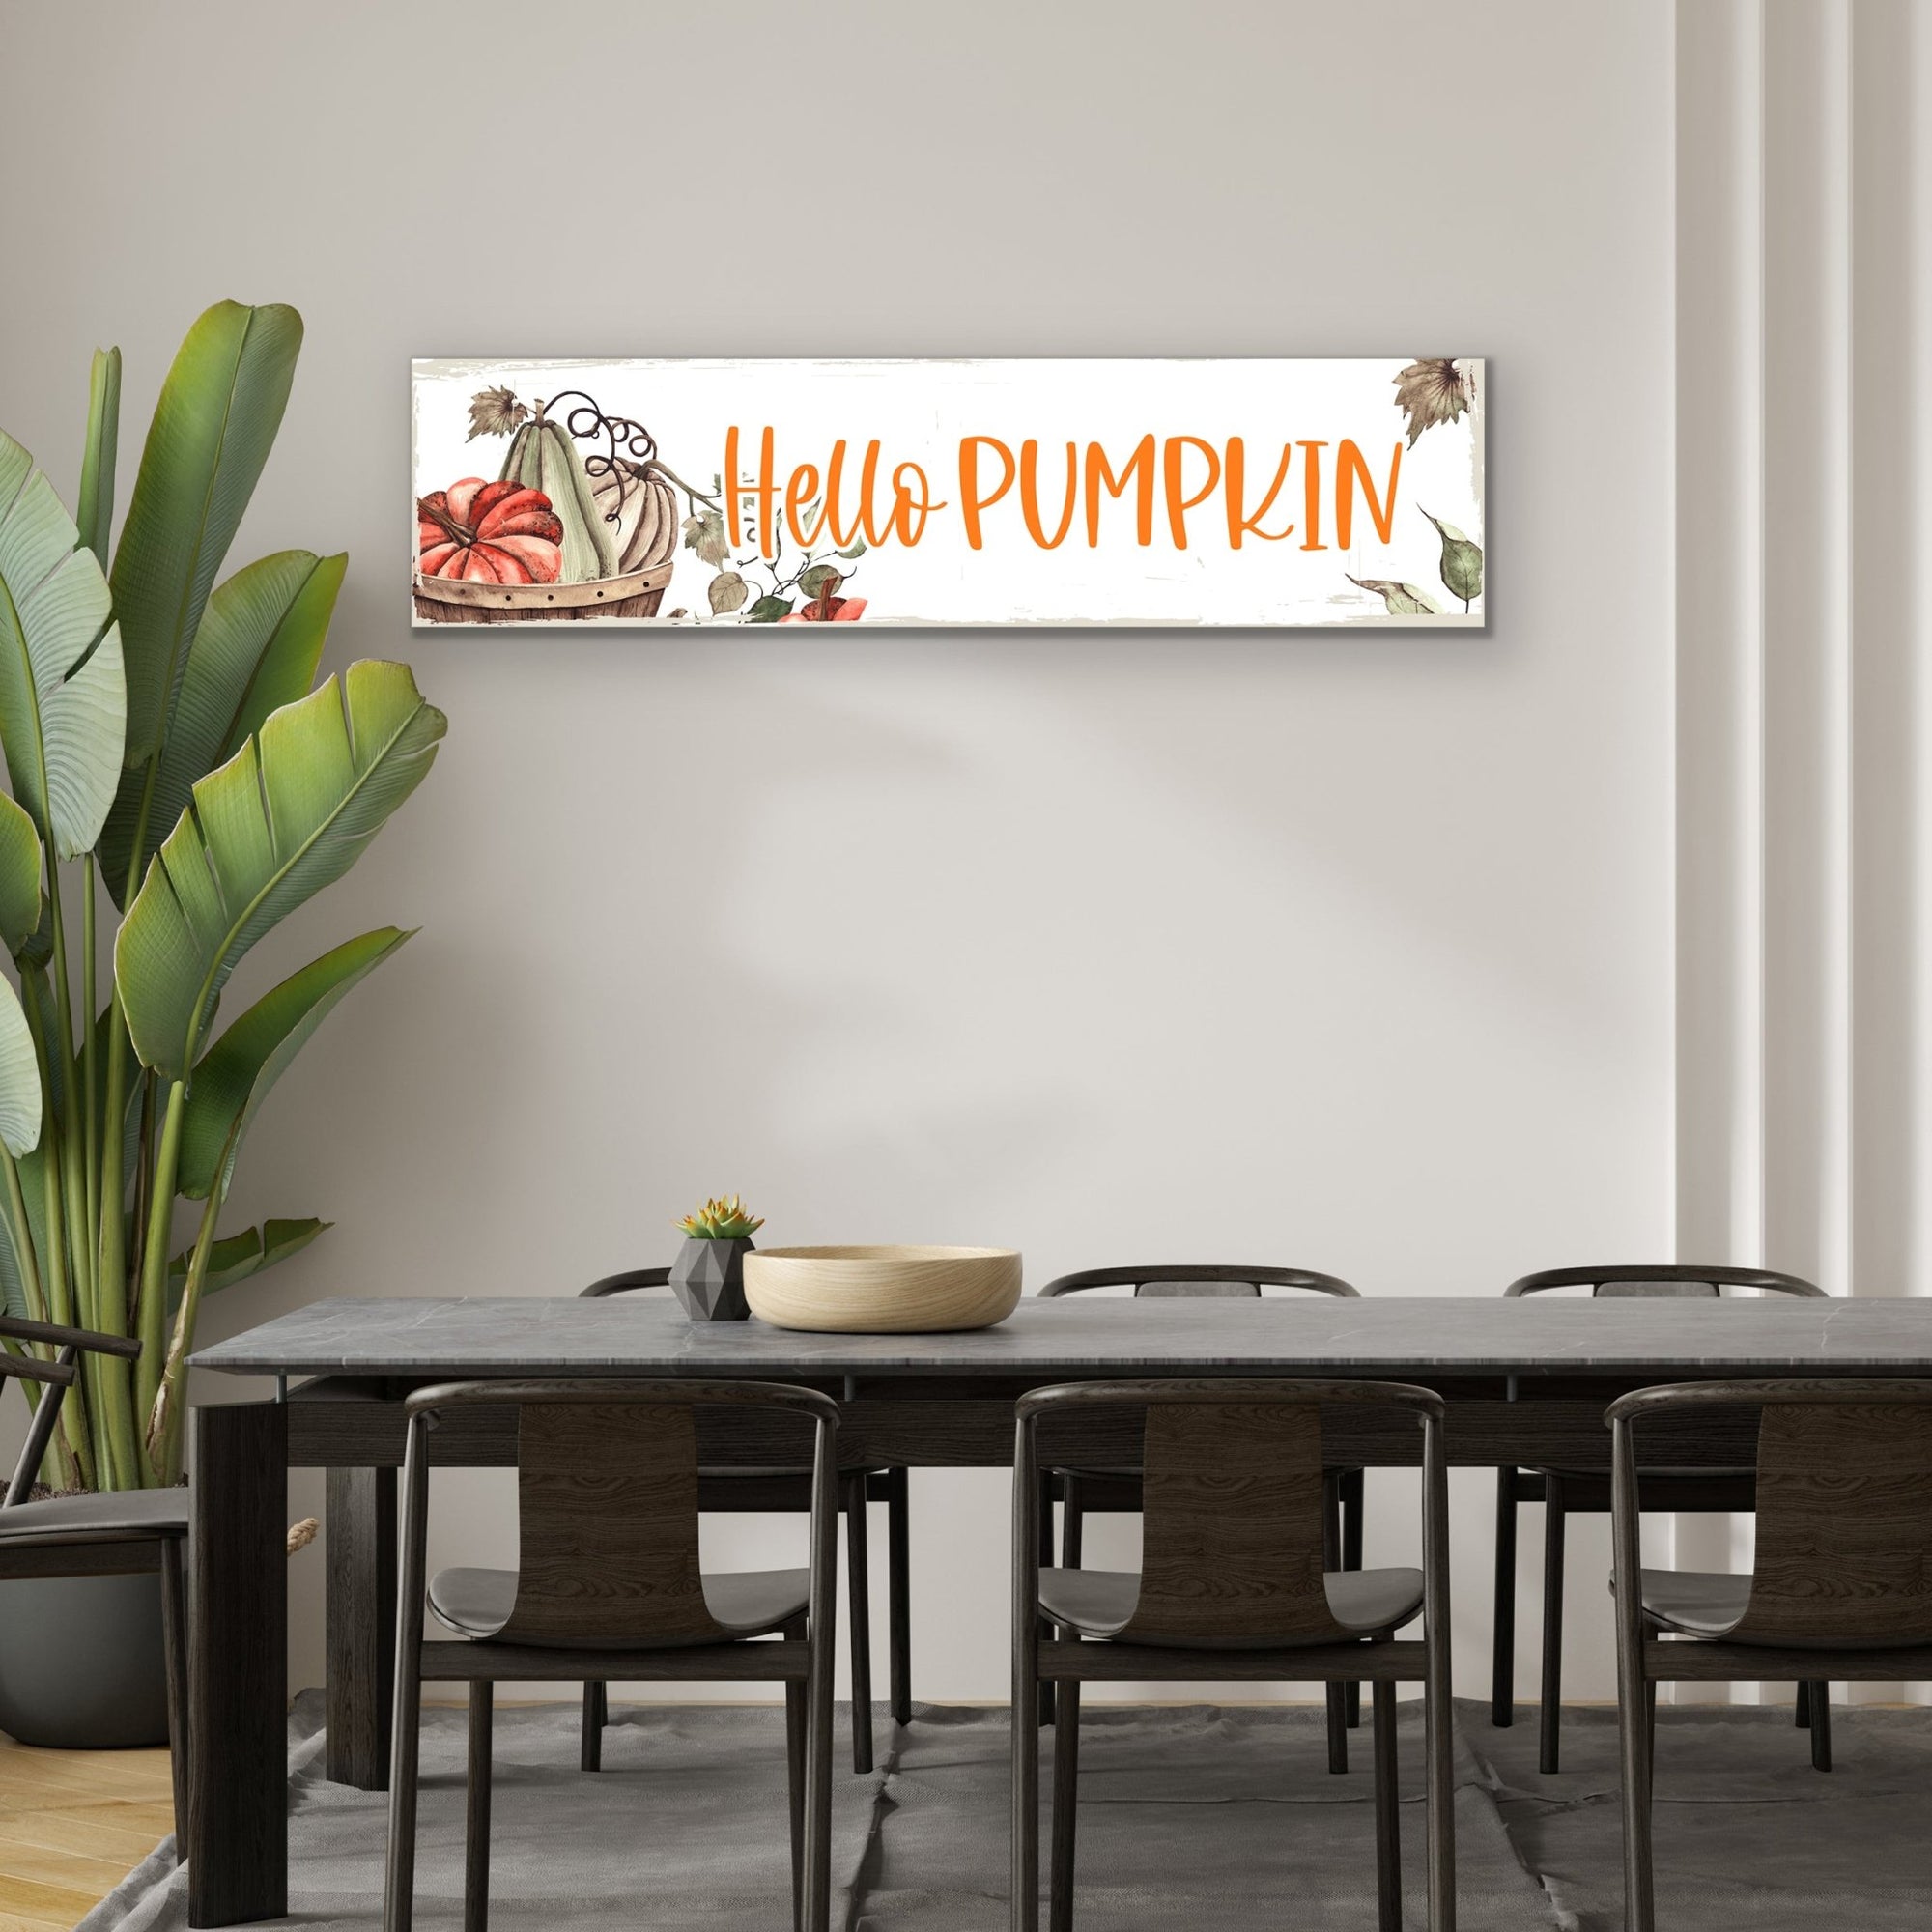 Hanging Inspirational Wall Plaque for Fall Season - LifeSong Milestones